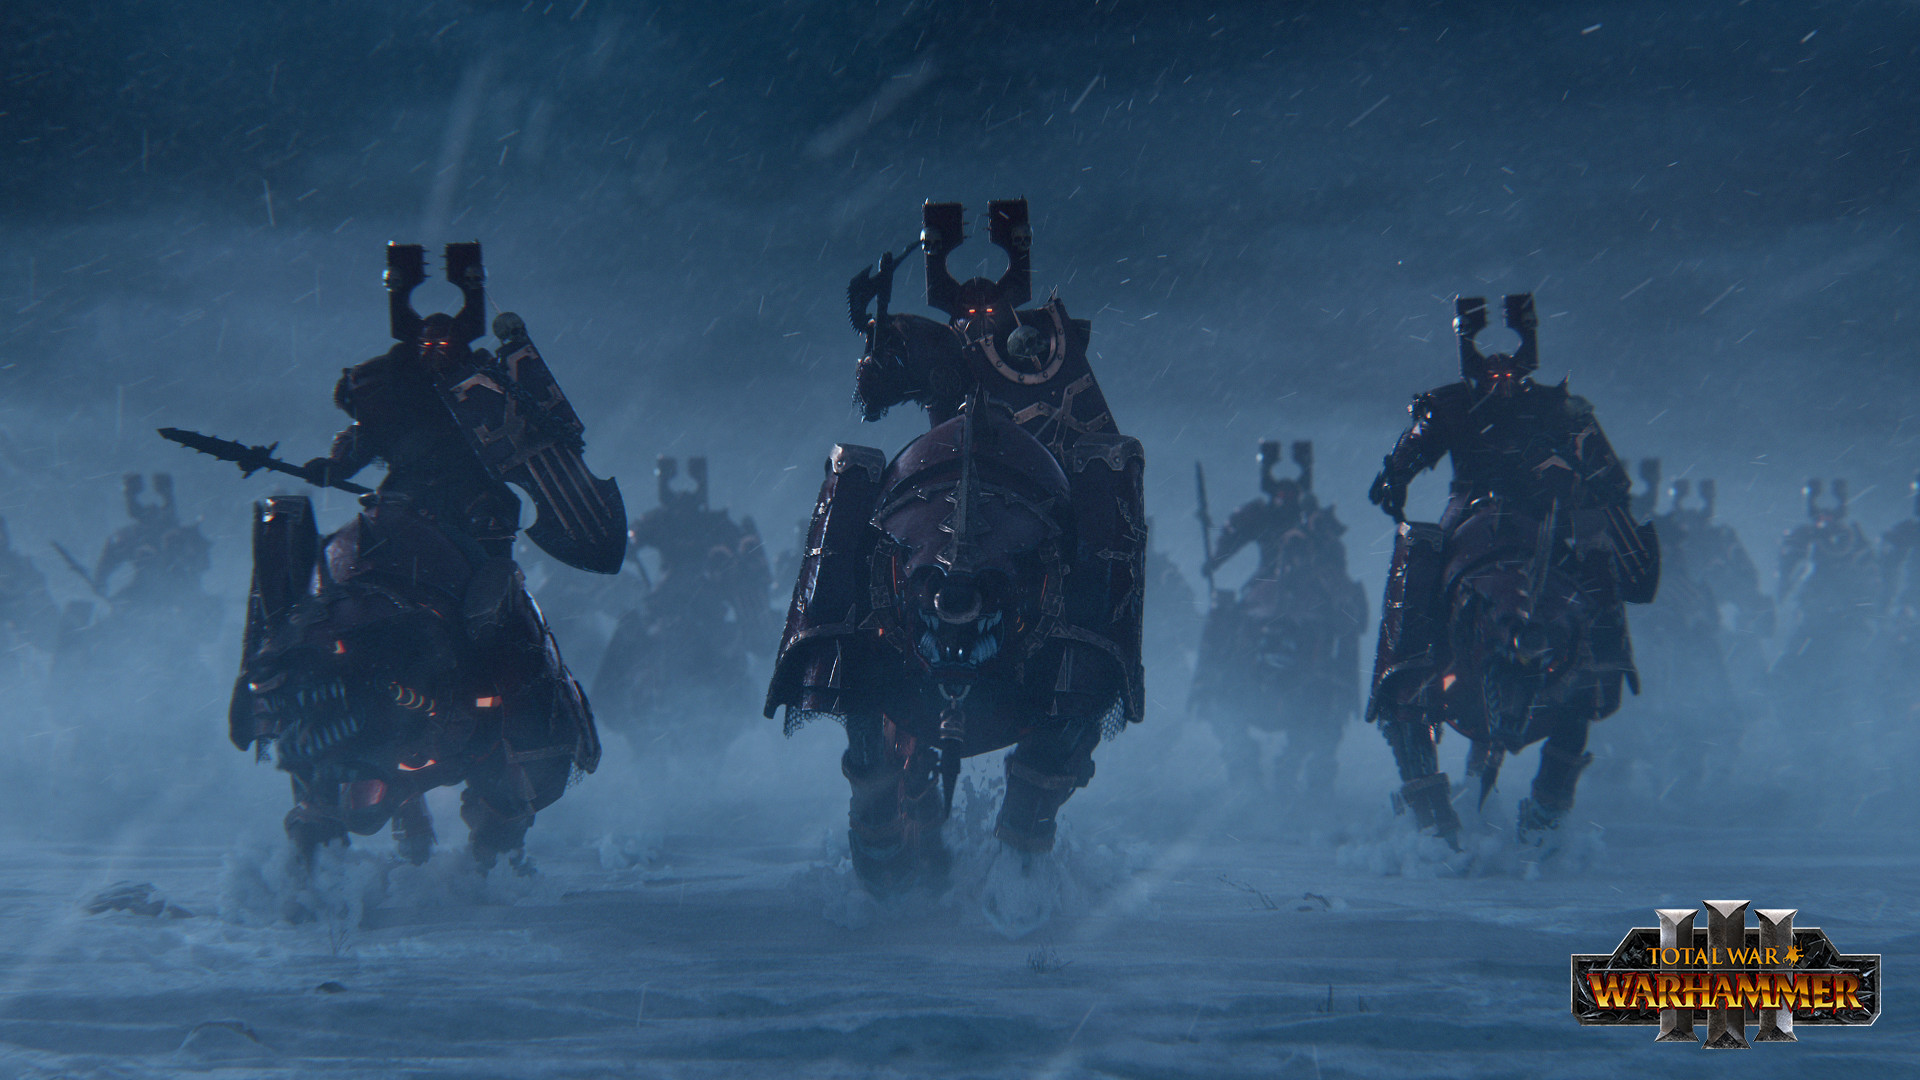 Total War: Warhammer 3 – Kislev and Khorne Go to War in New Trailer